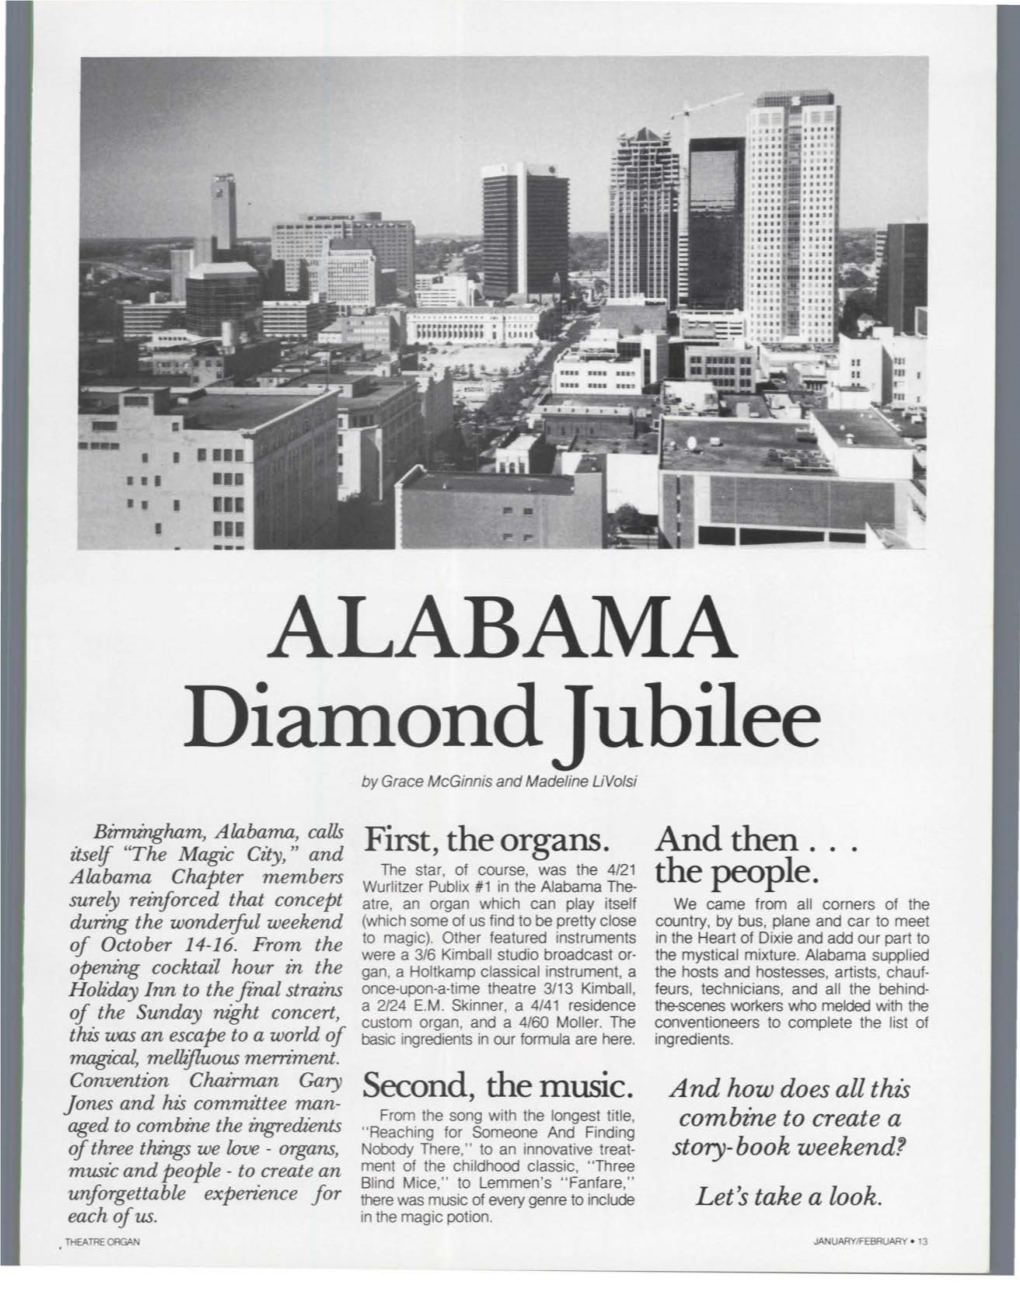 ALABAMA Diamond Jubilee by Grace Mcginnis and Madeline Uvolsi